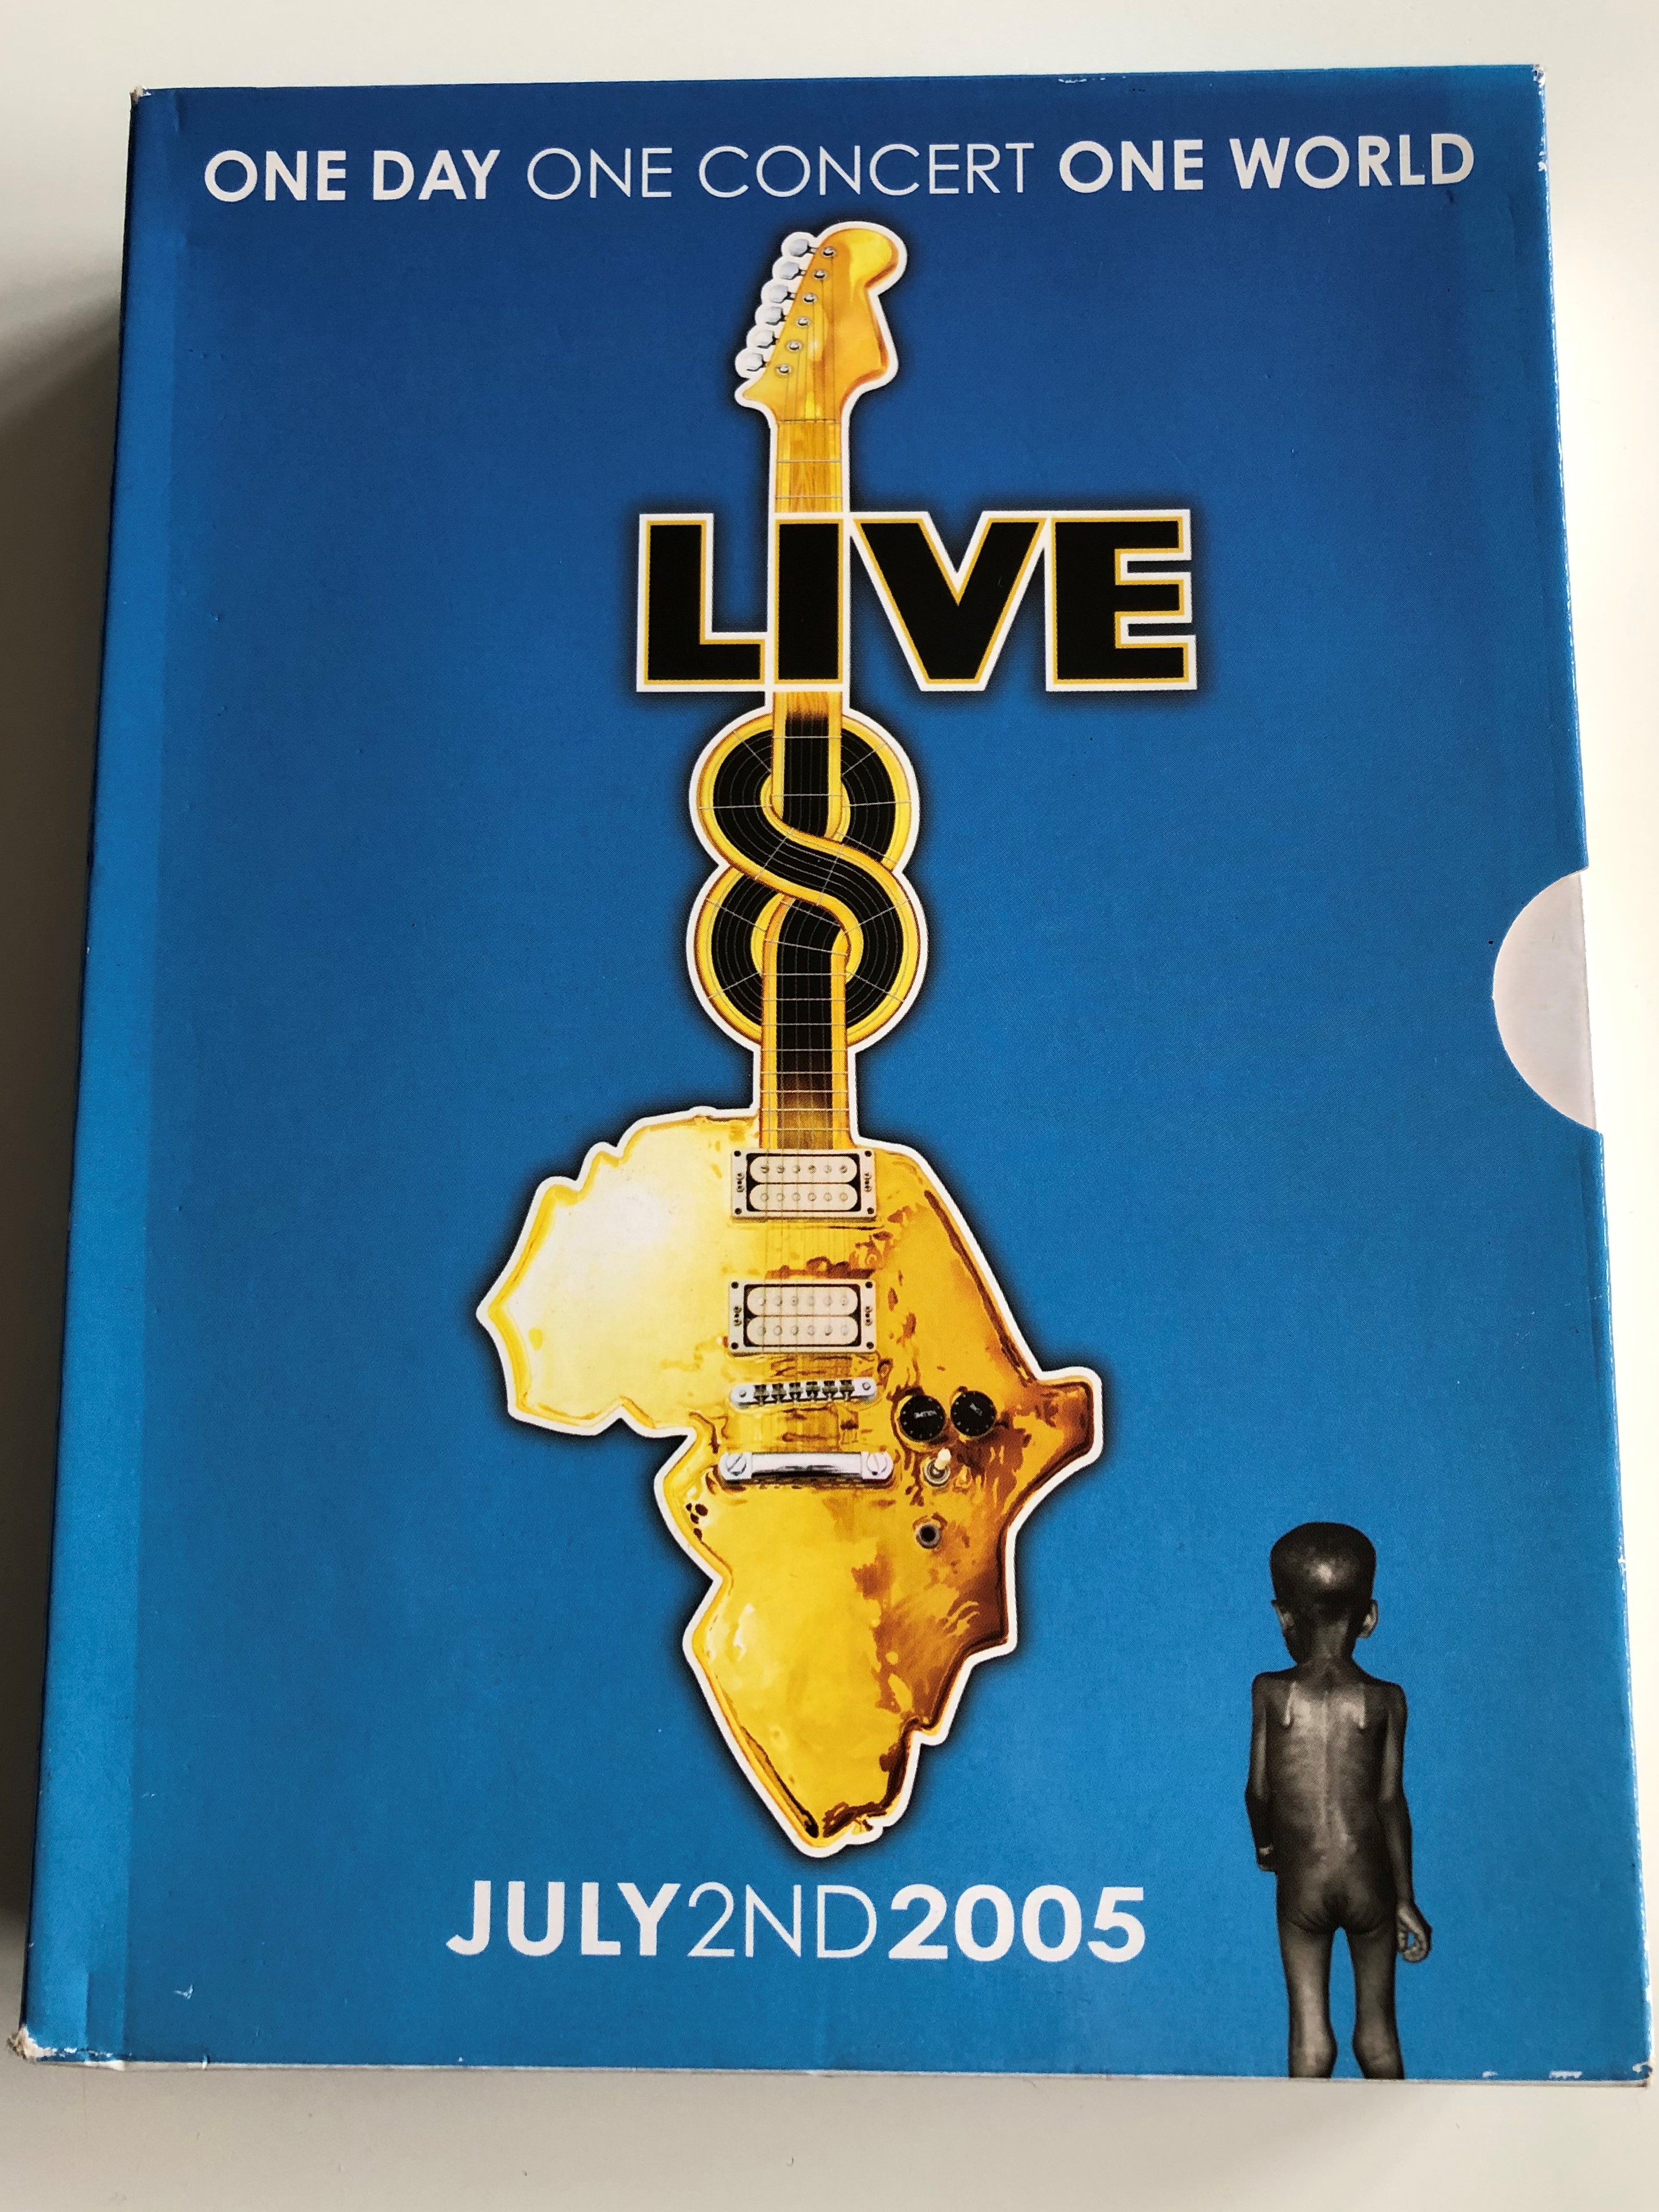 Live 8 DVD July 2nd 2005 / The long Walk to Justice / 9 concerts - 1000  artists - 2 Million Spectators - Make Povert History / Paul Mccartney,  Coldplay, Elton John, Dido, Josh Groban, Alicia Keys / 4 DVD BOX -  bibleinmylanguage